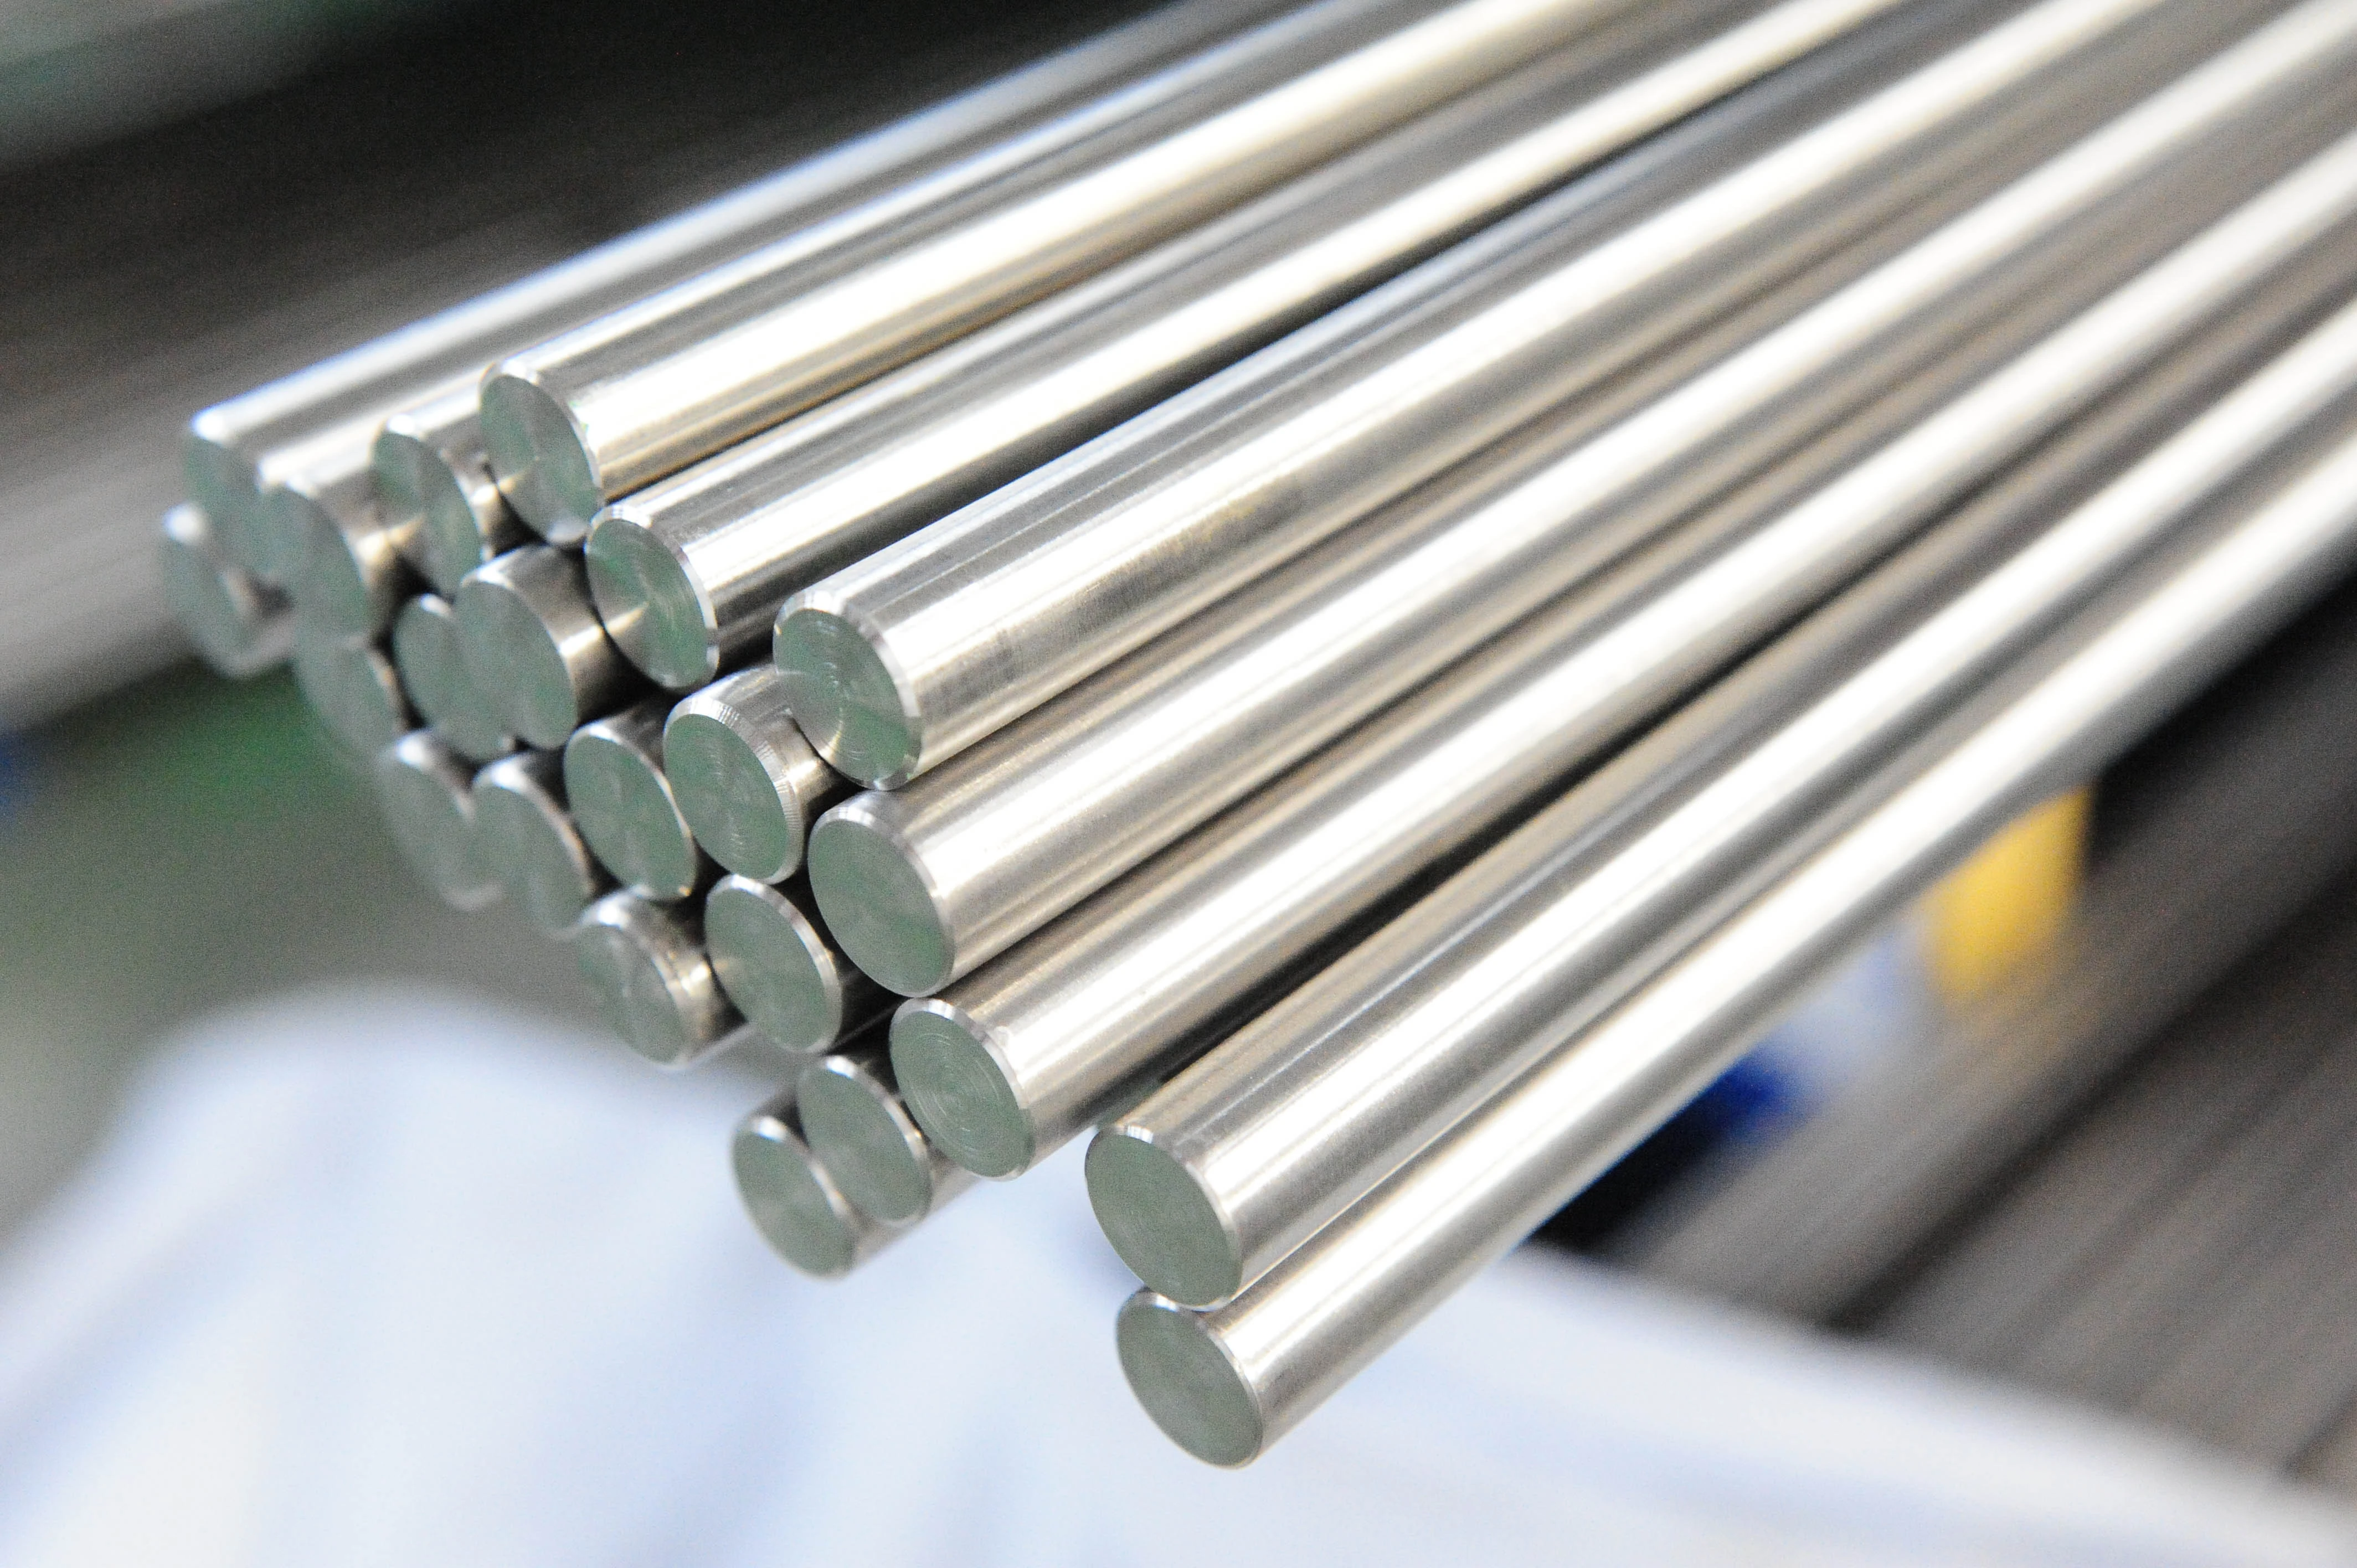 Titanium rod factory ASTM B348 titanium scooter bars for surgical implant application